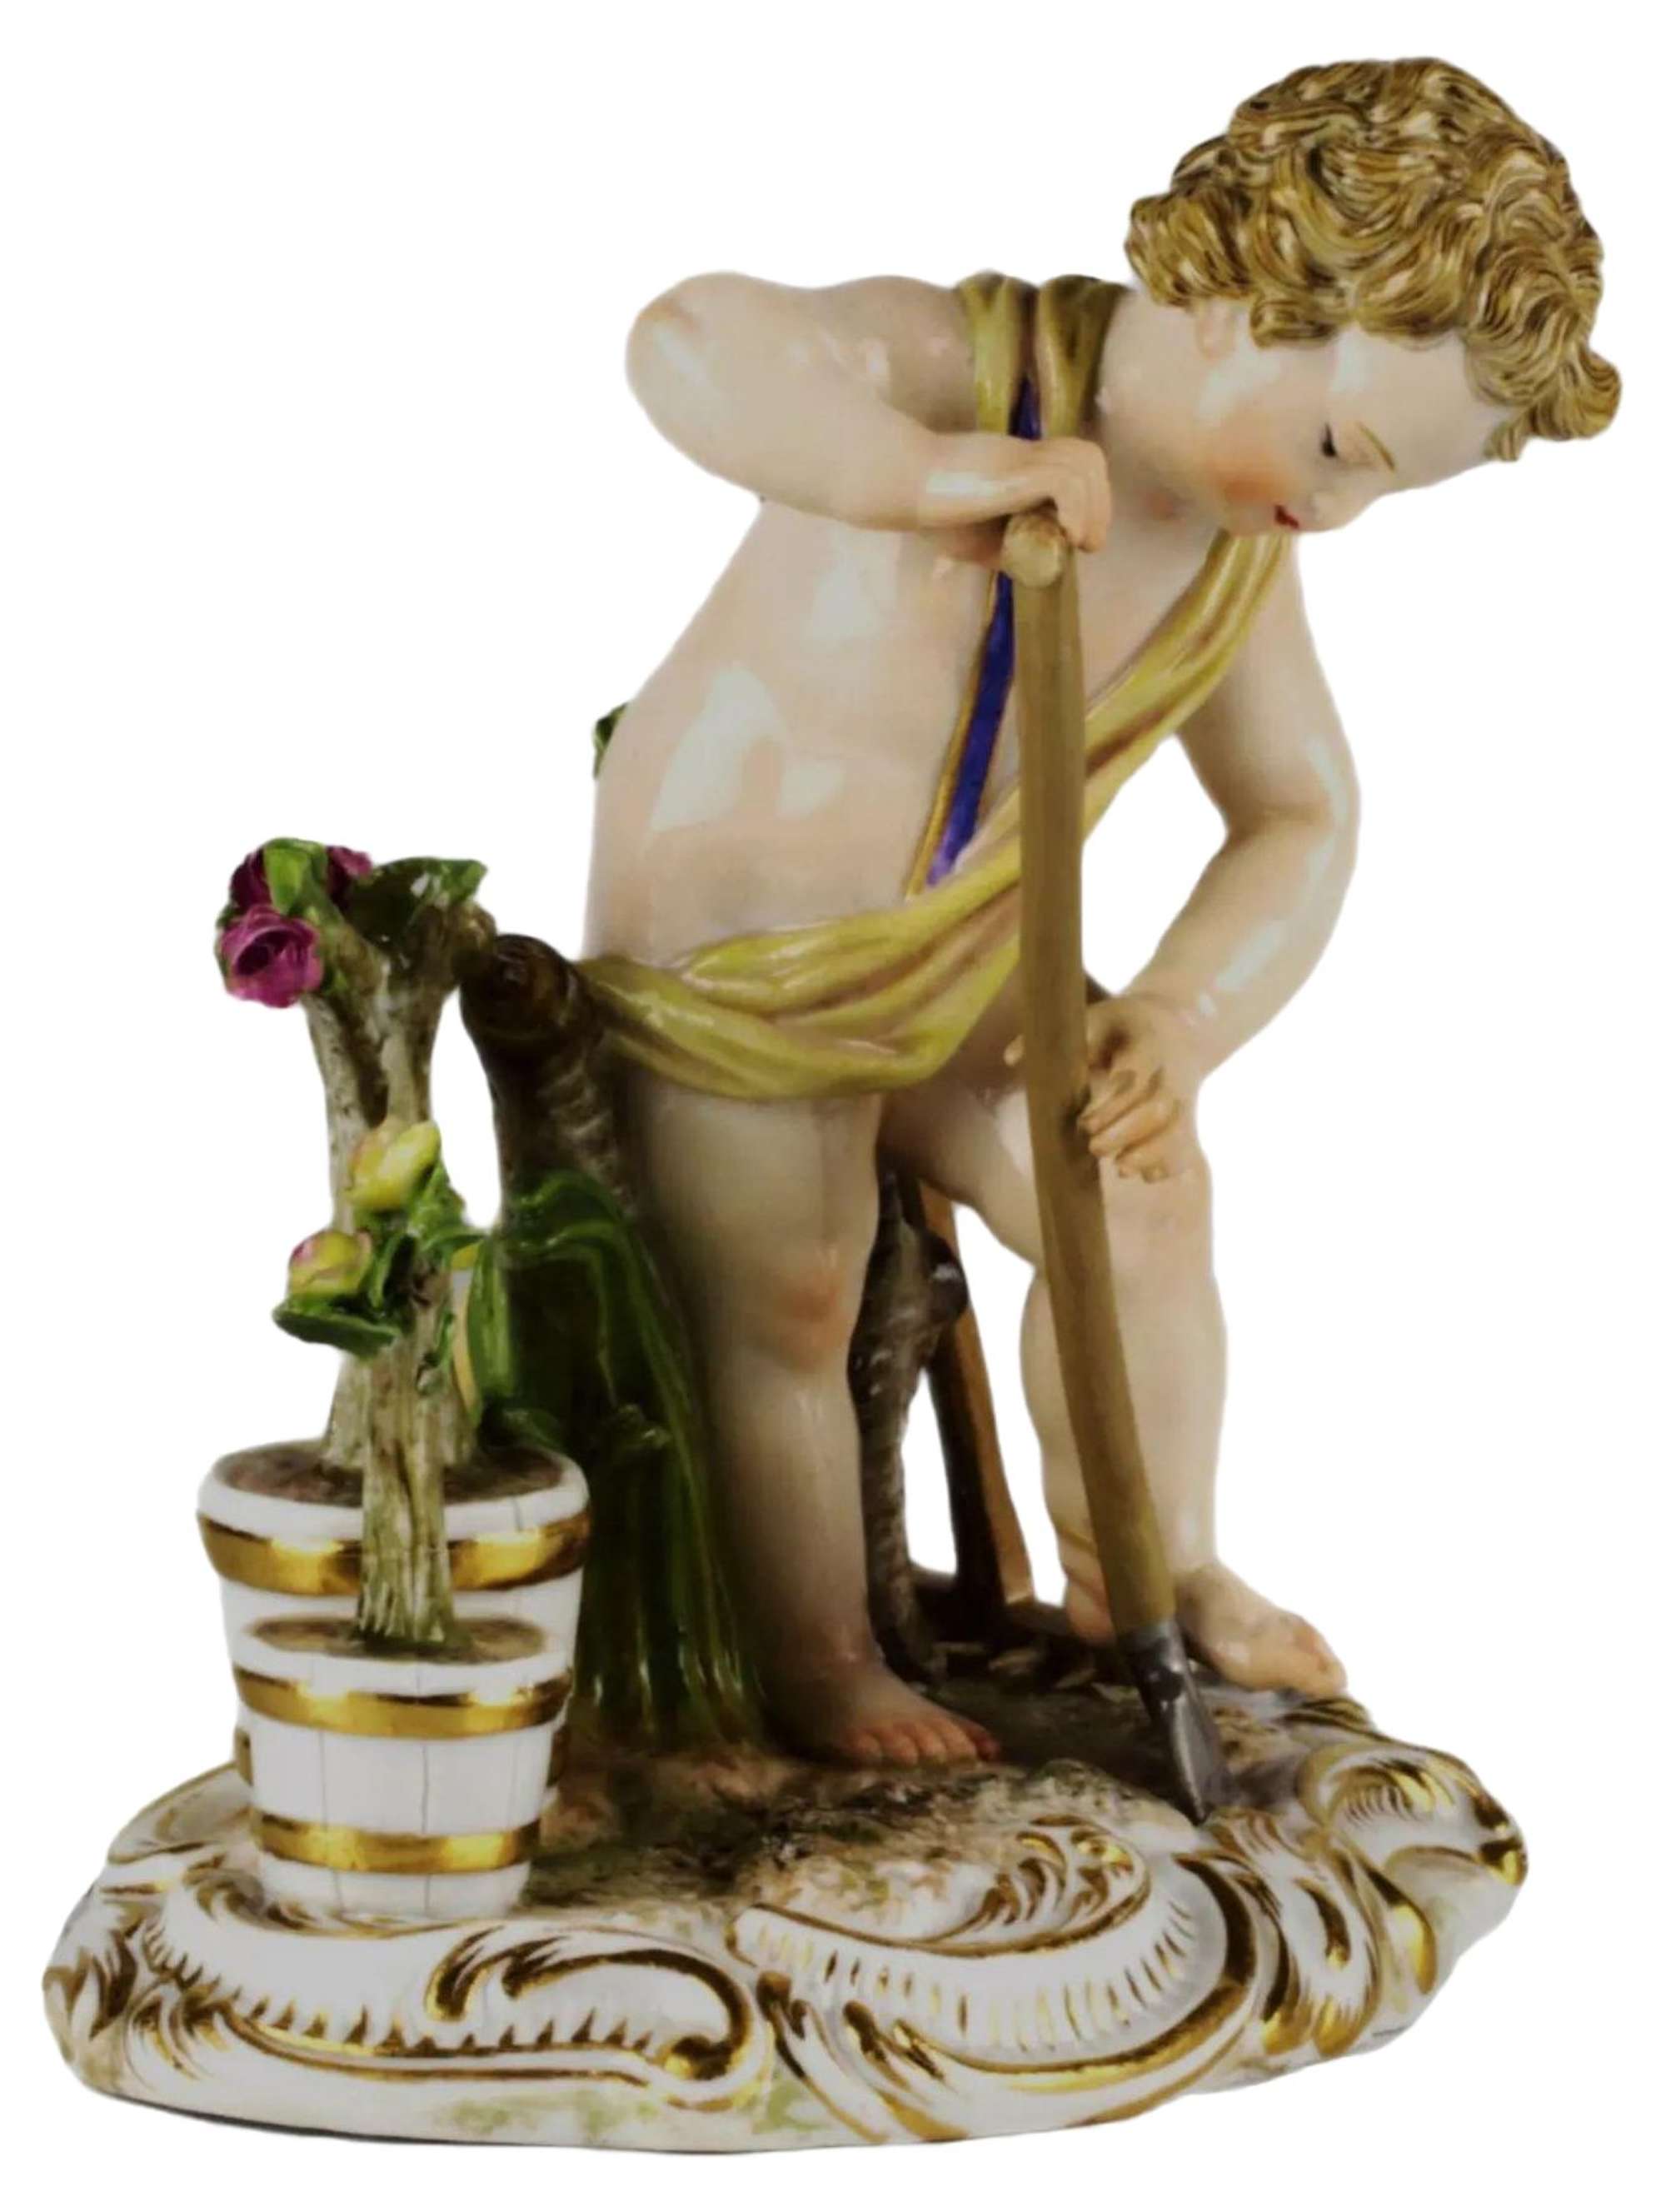 Gardener Figurine from Meissen